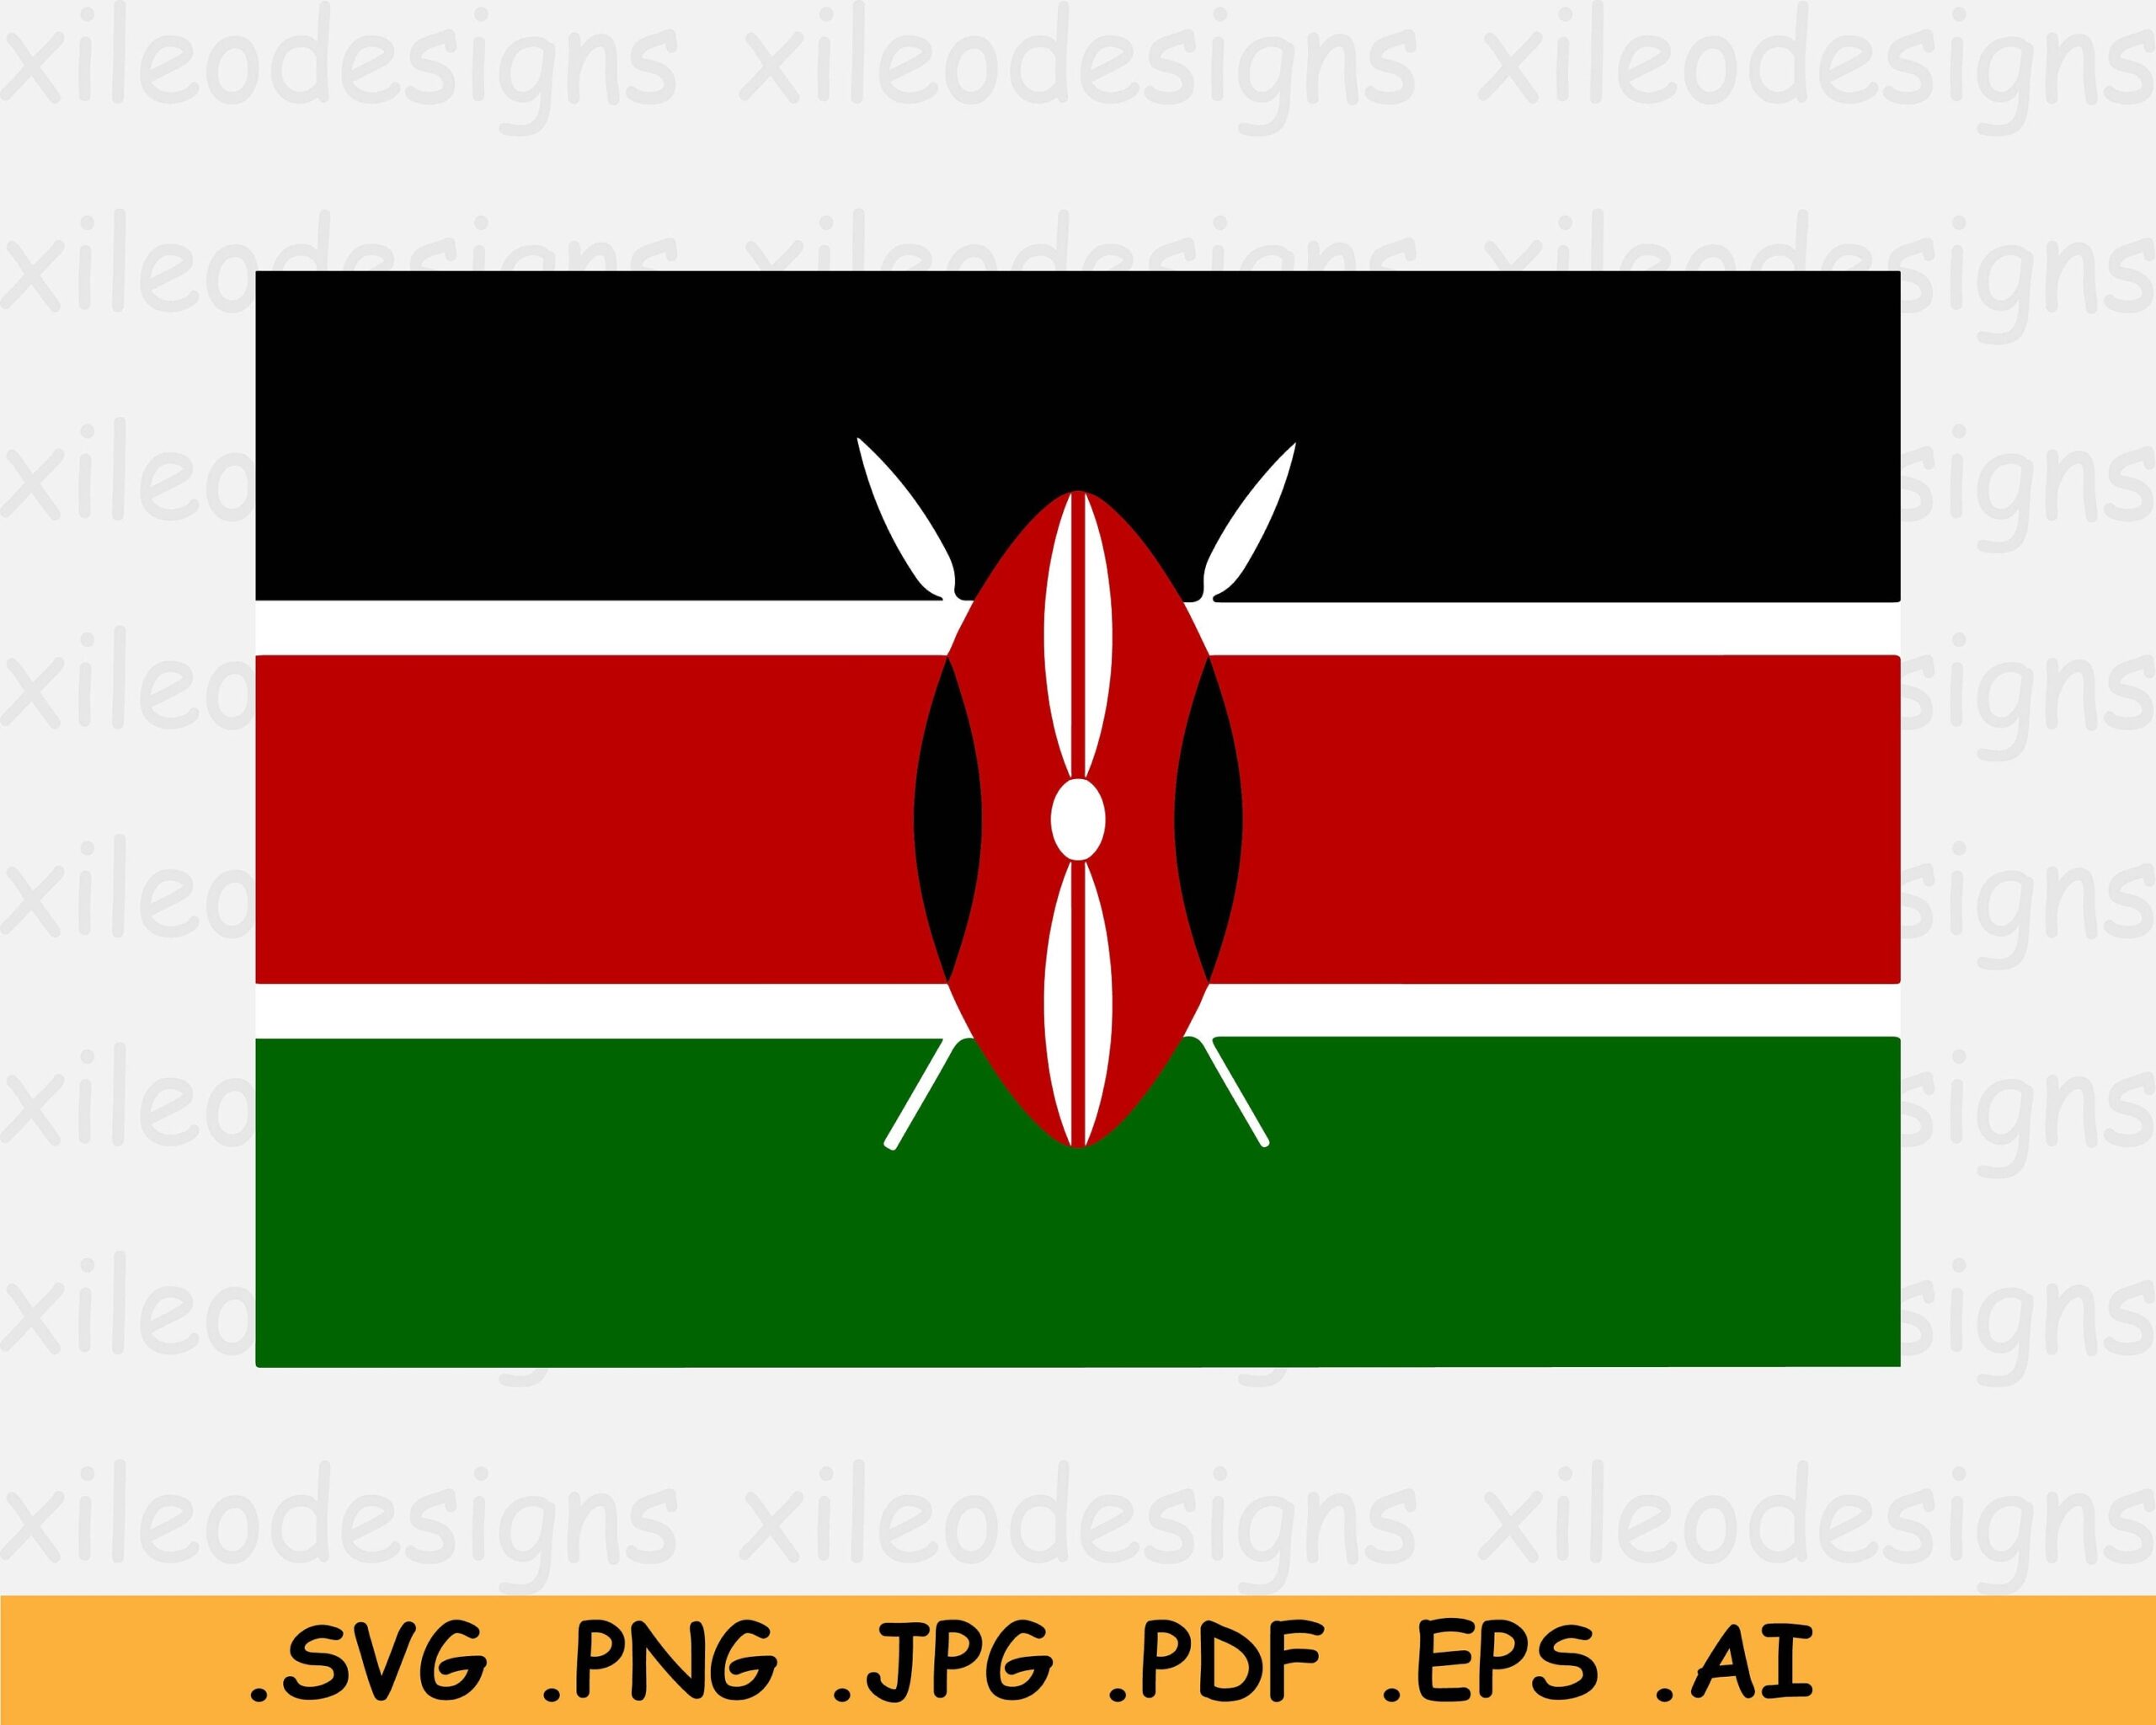 Kenya National Flag SVG Kenyan Nation Country Banner Cricut Cut File Digital Download Clipart Vector Graphic Icon Eps Ai Png Jpg Pdf Etsy